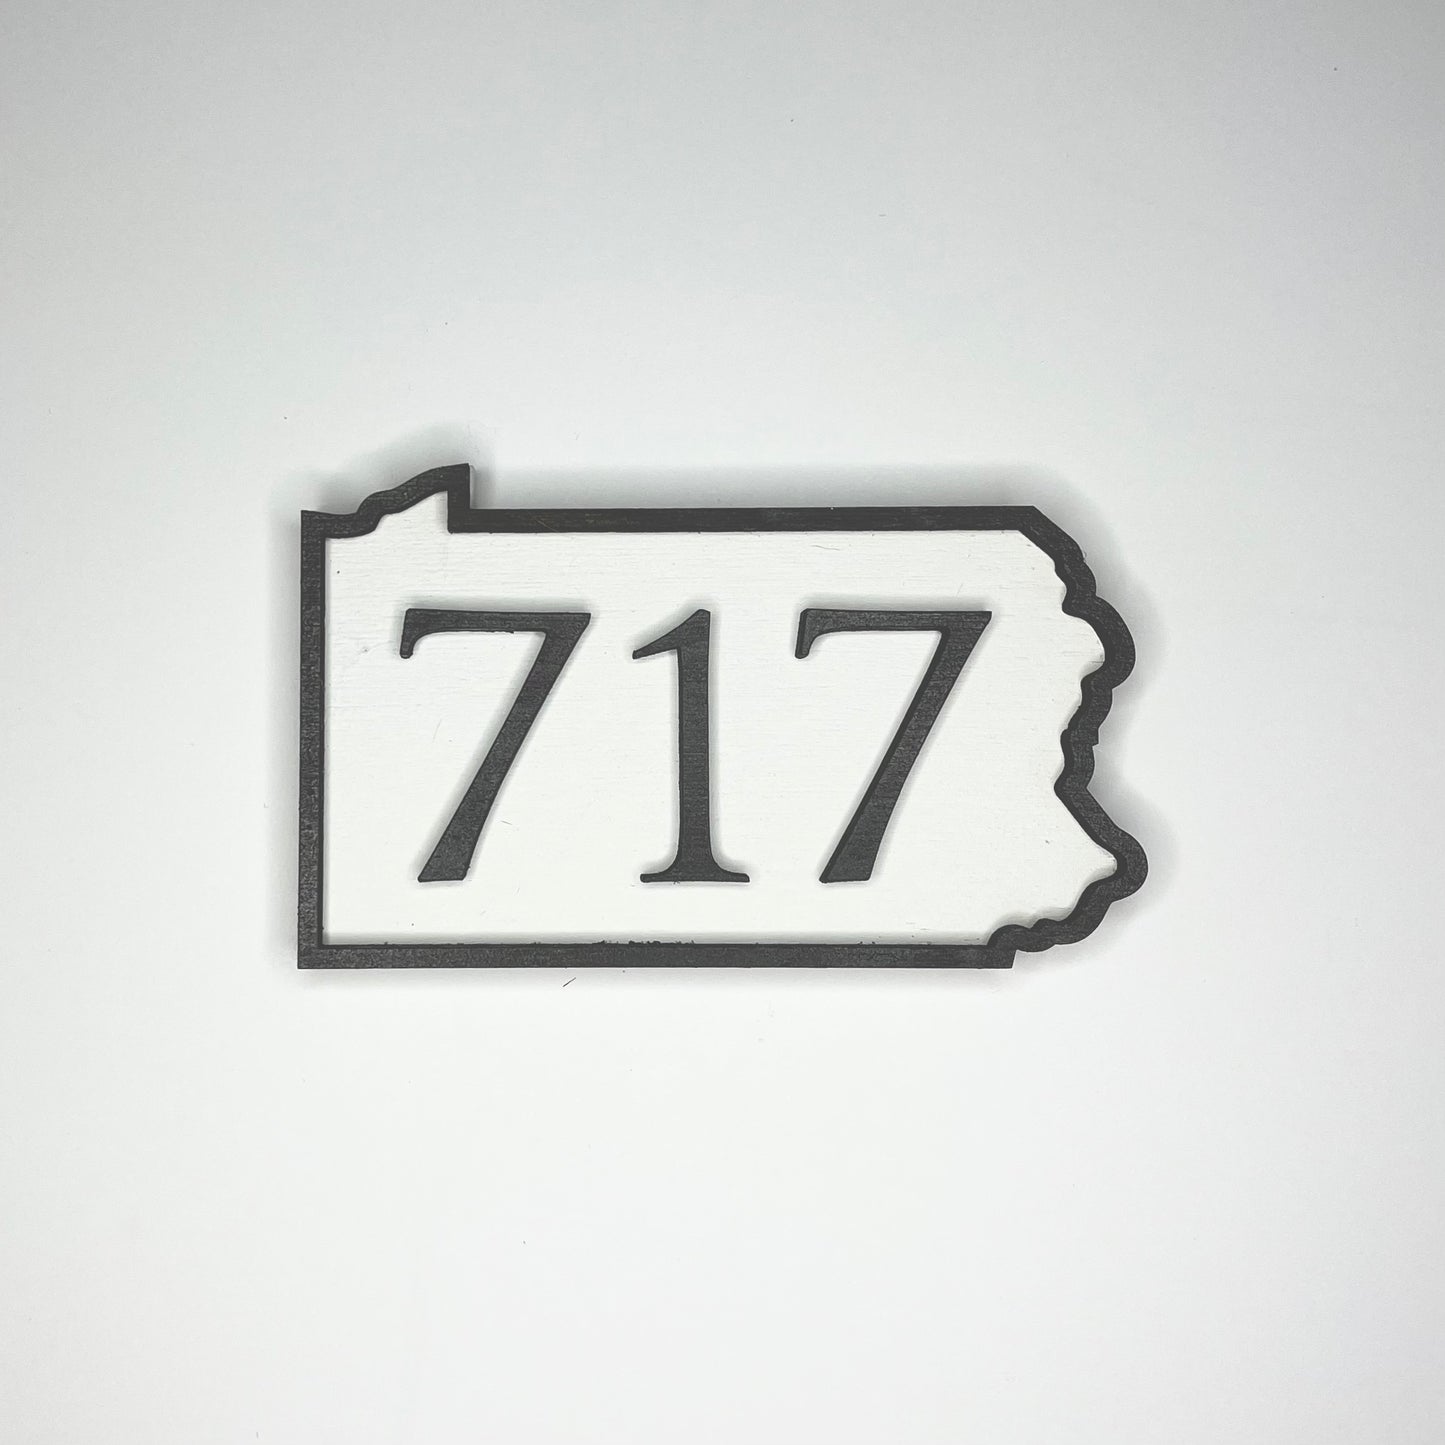 717 Pennsylvania 3D magnet